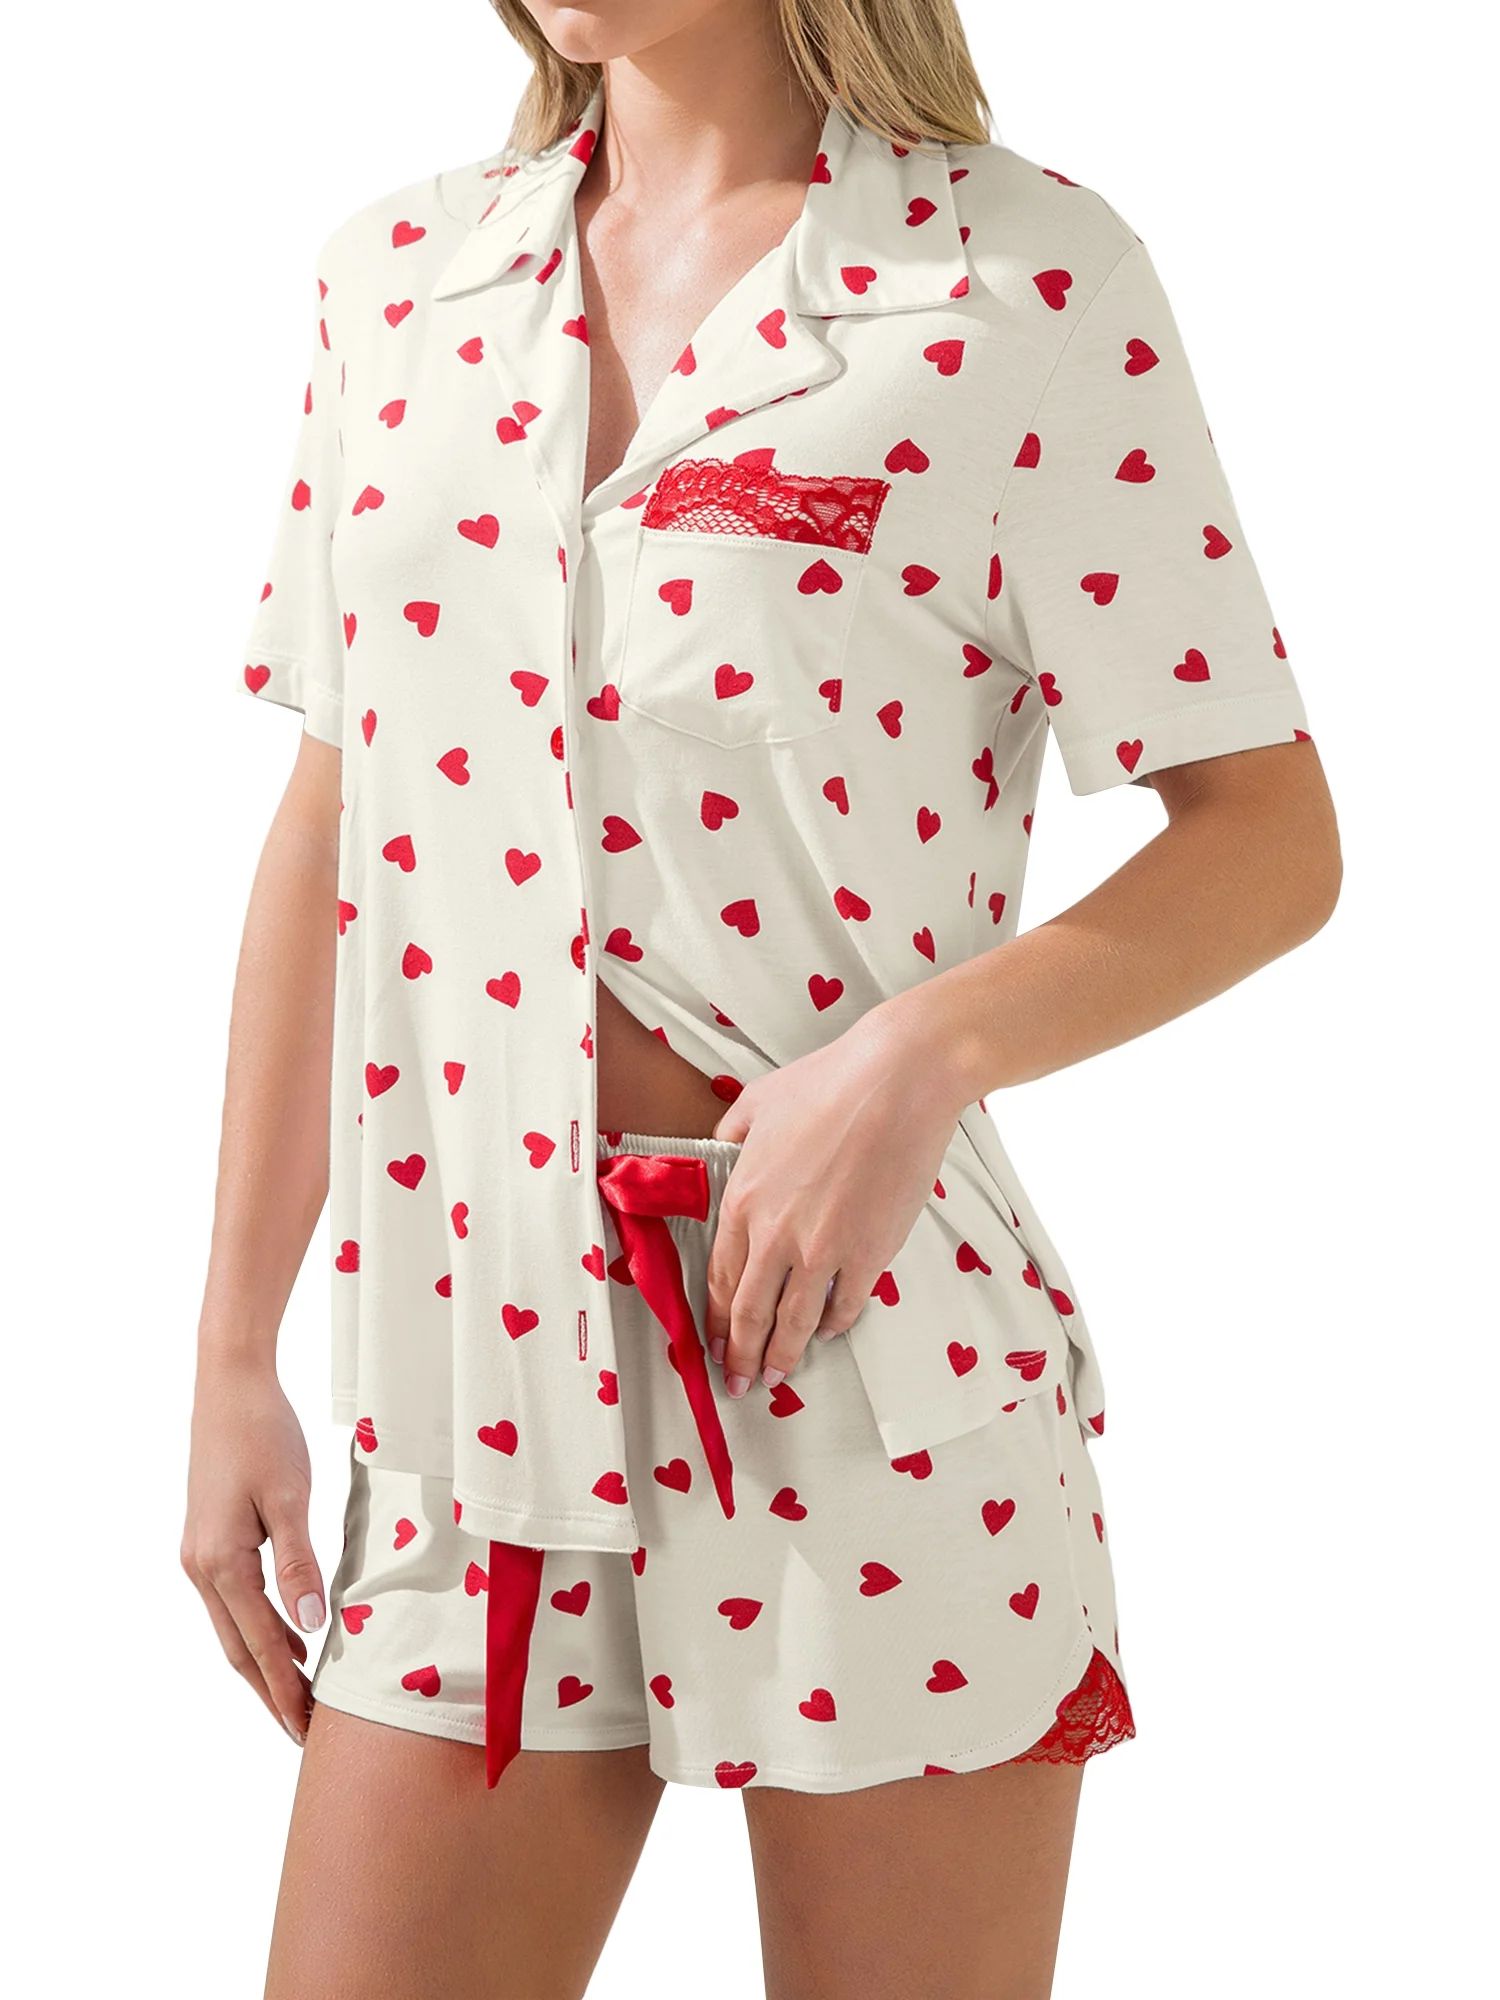 Kishawna Women Valentine's Day Pajama Set,Heart Print Short Sleeve Top Shorts Sleepwear Loungewea... | Walmart (US)